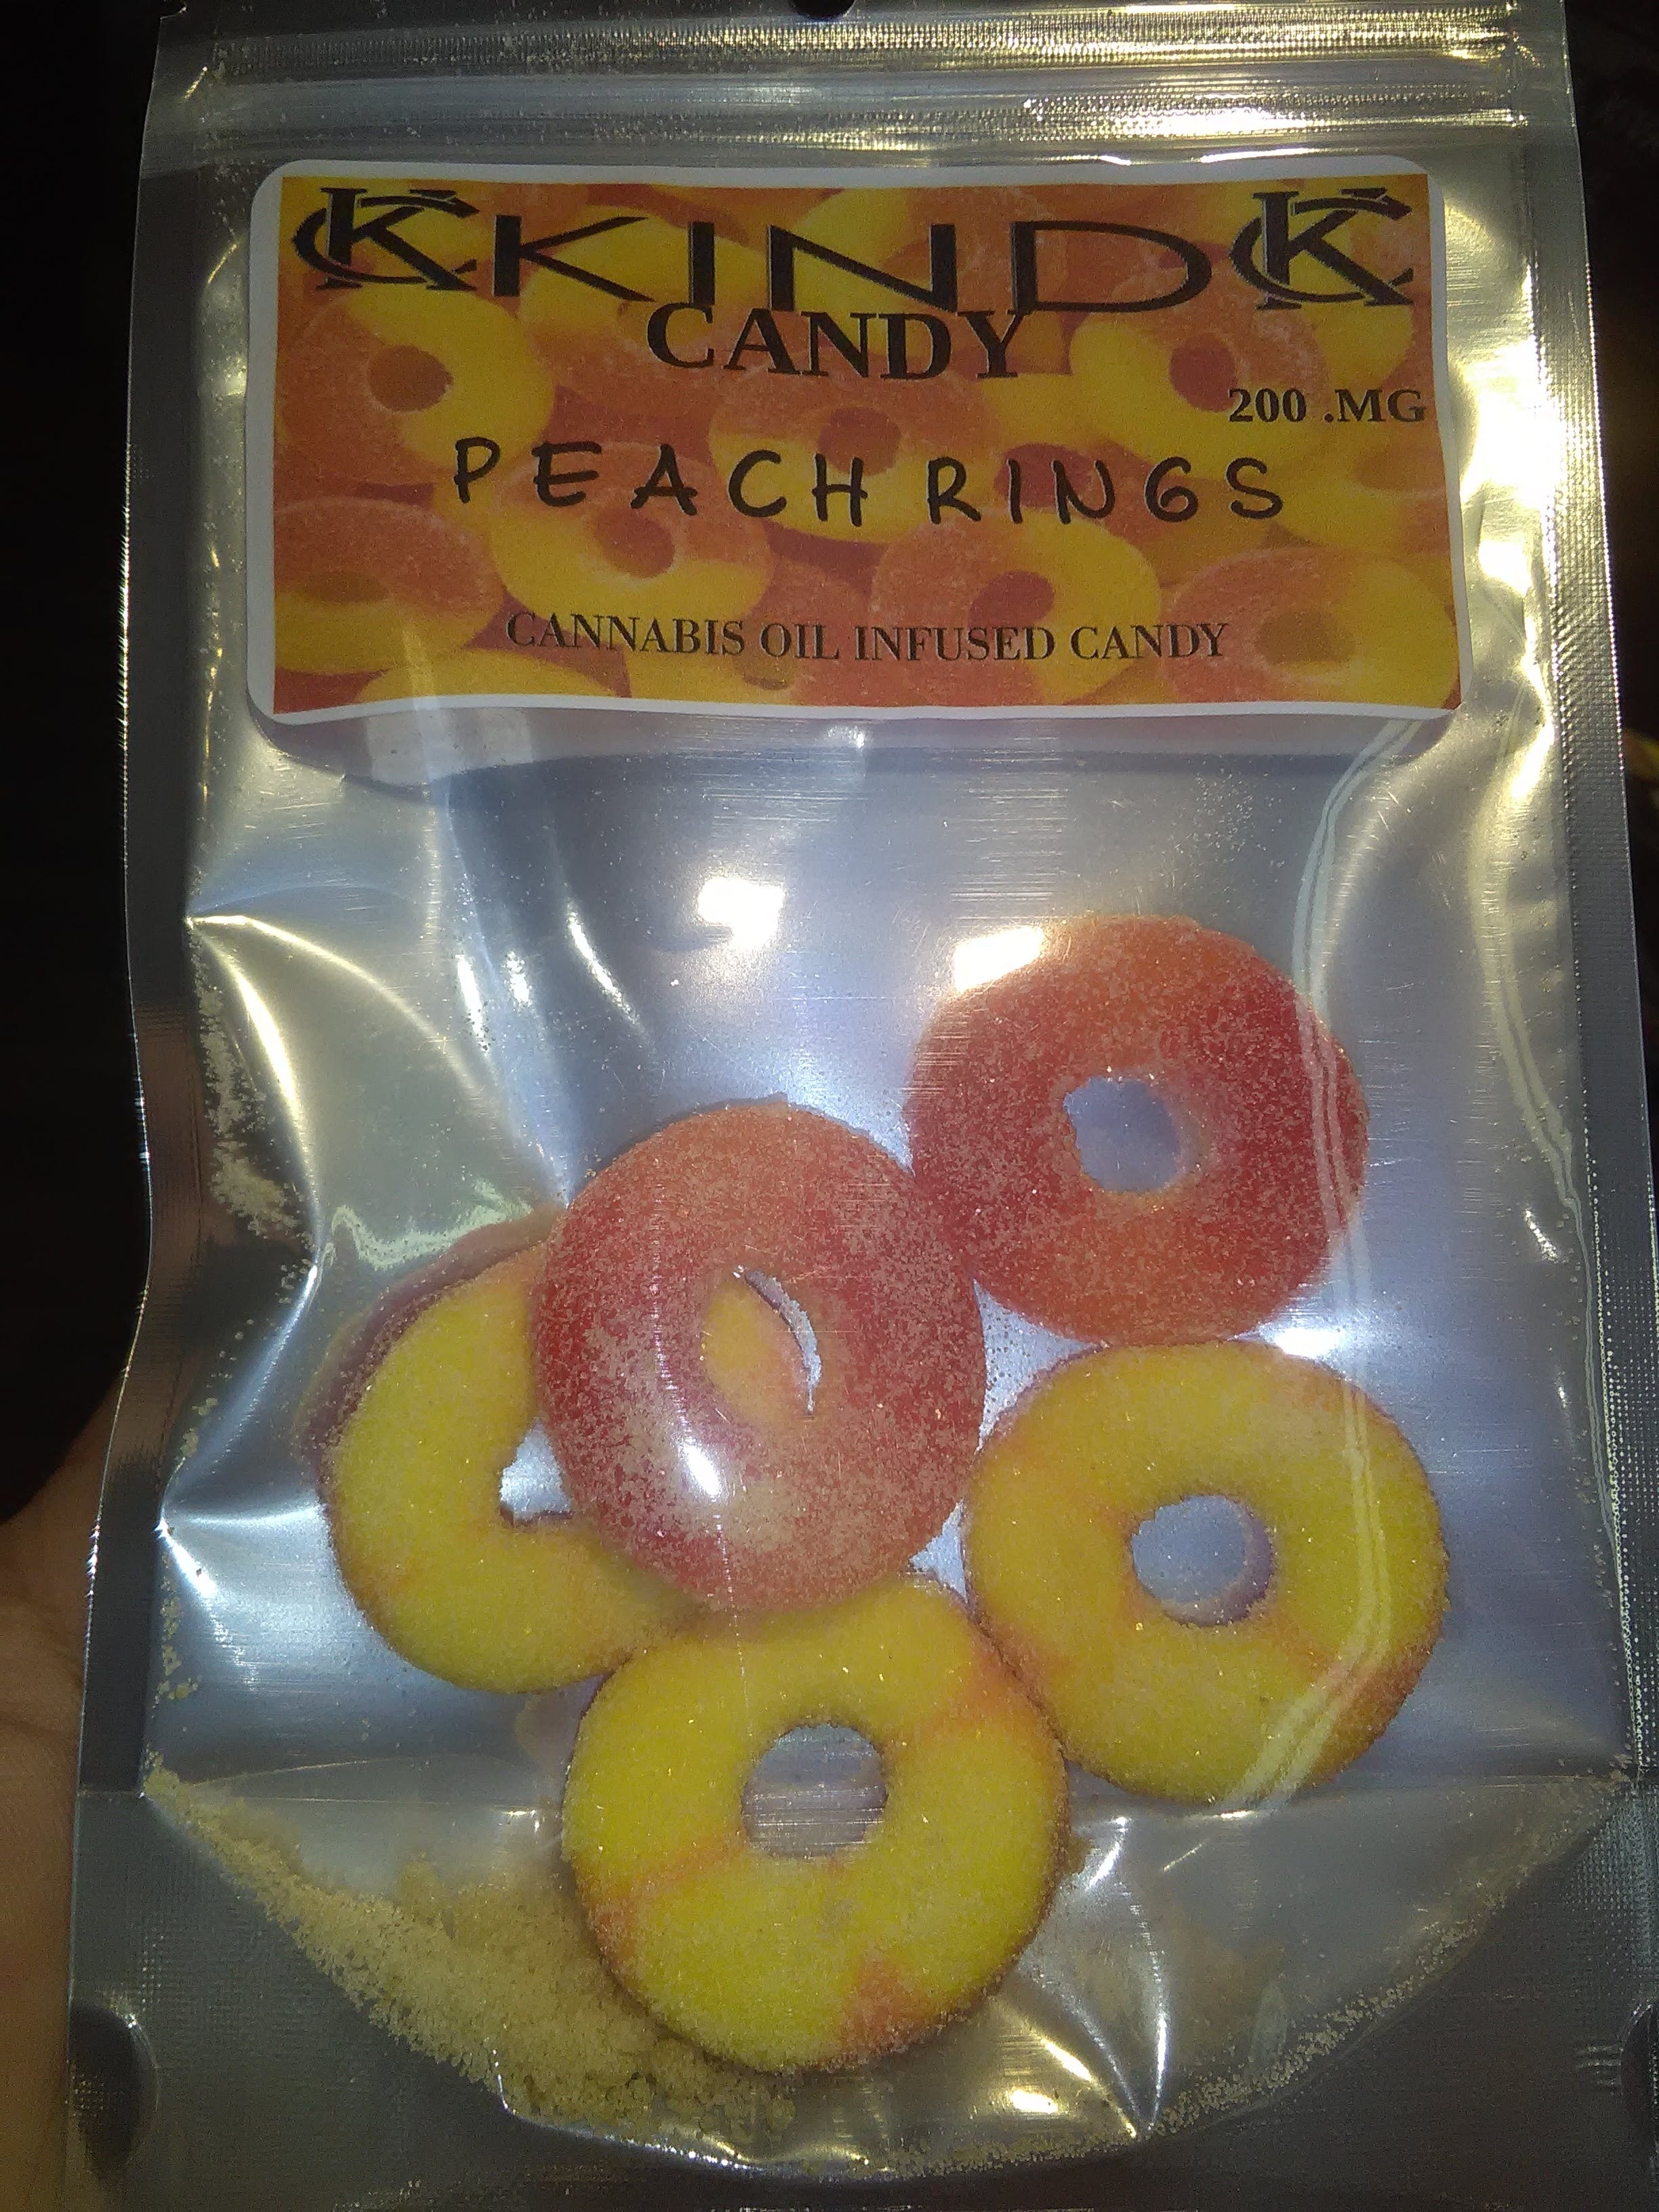 edible-kind-candy-peach-rings-200-mg